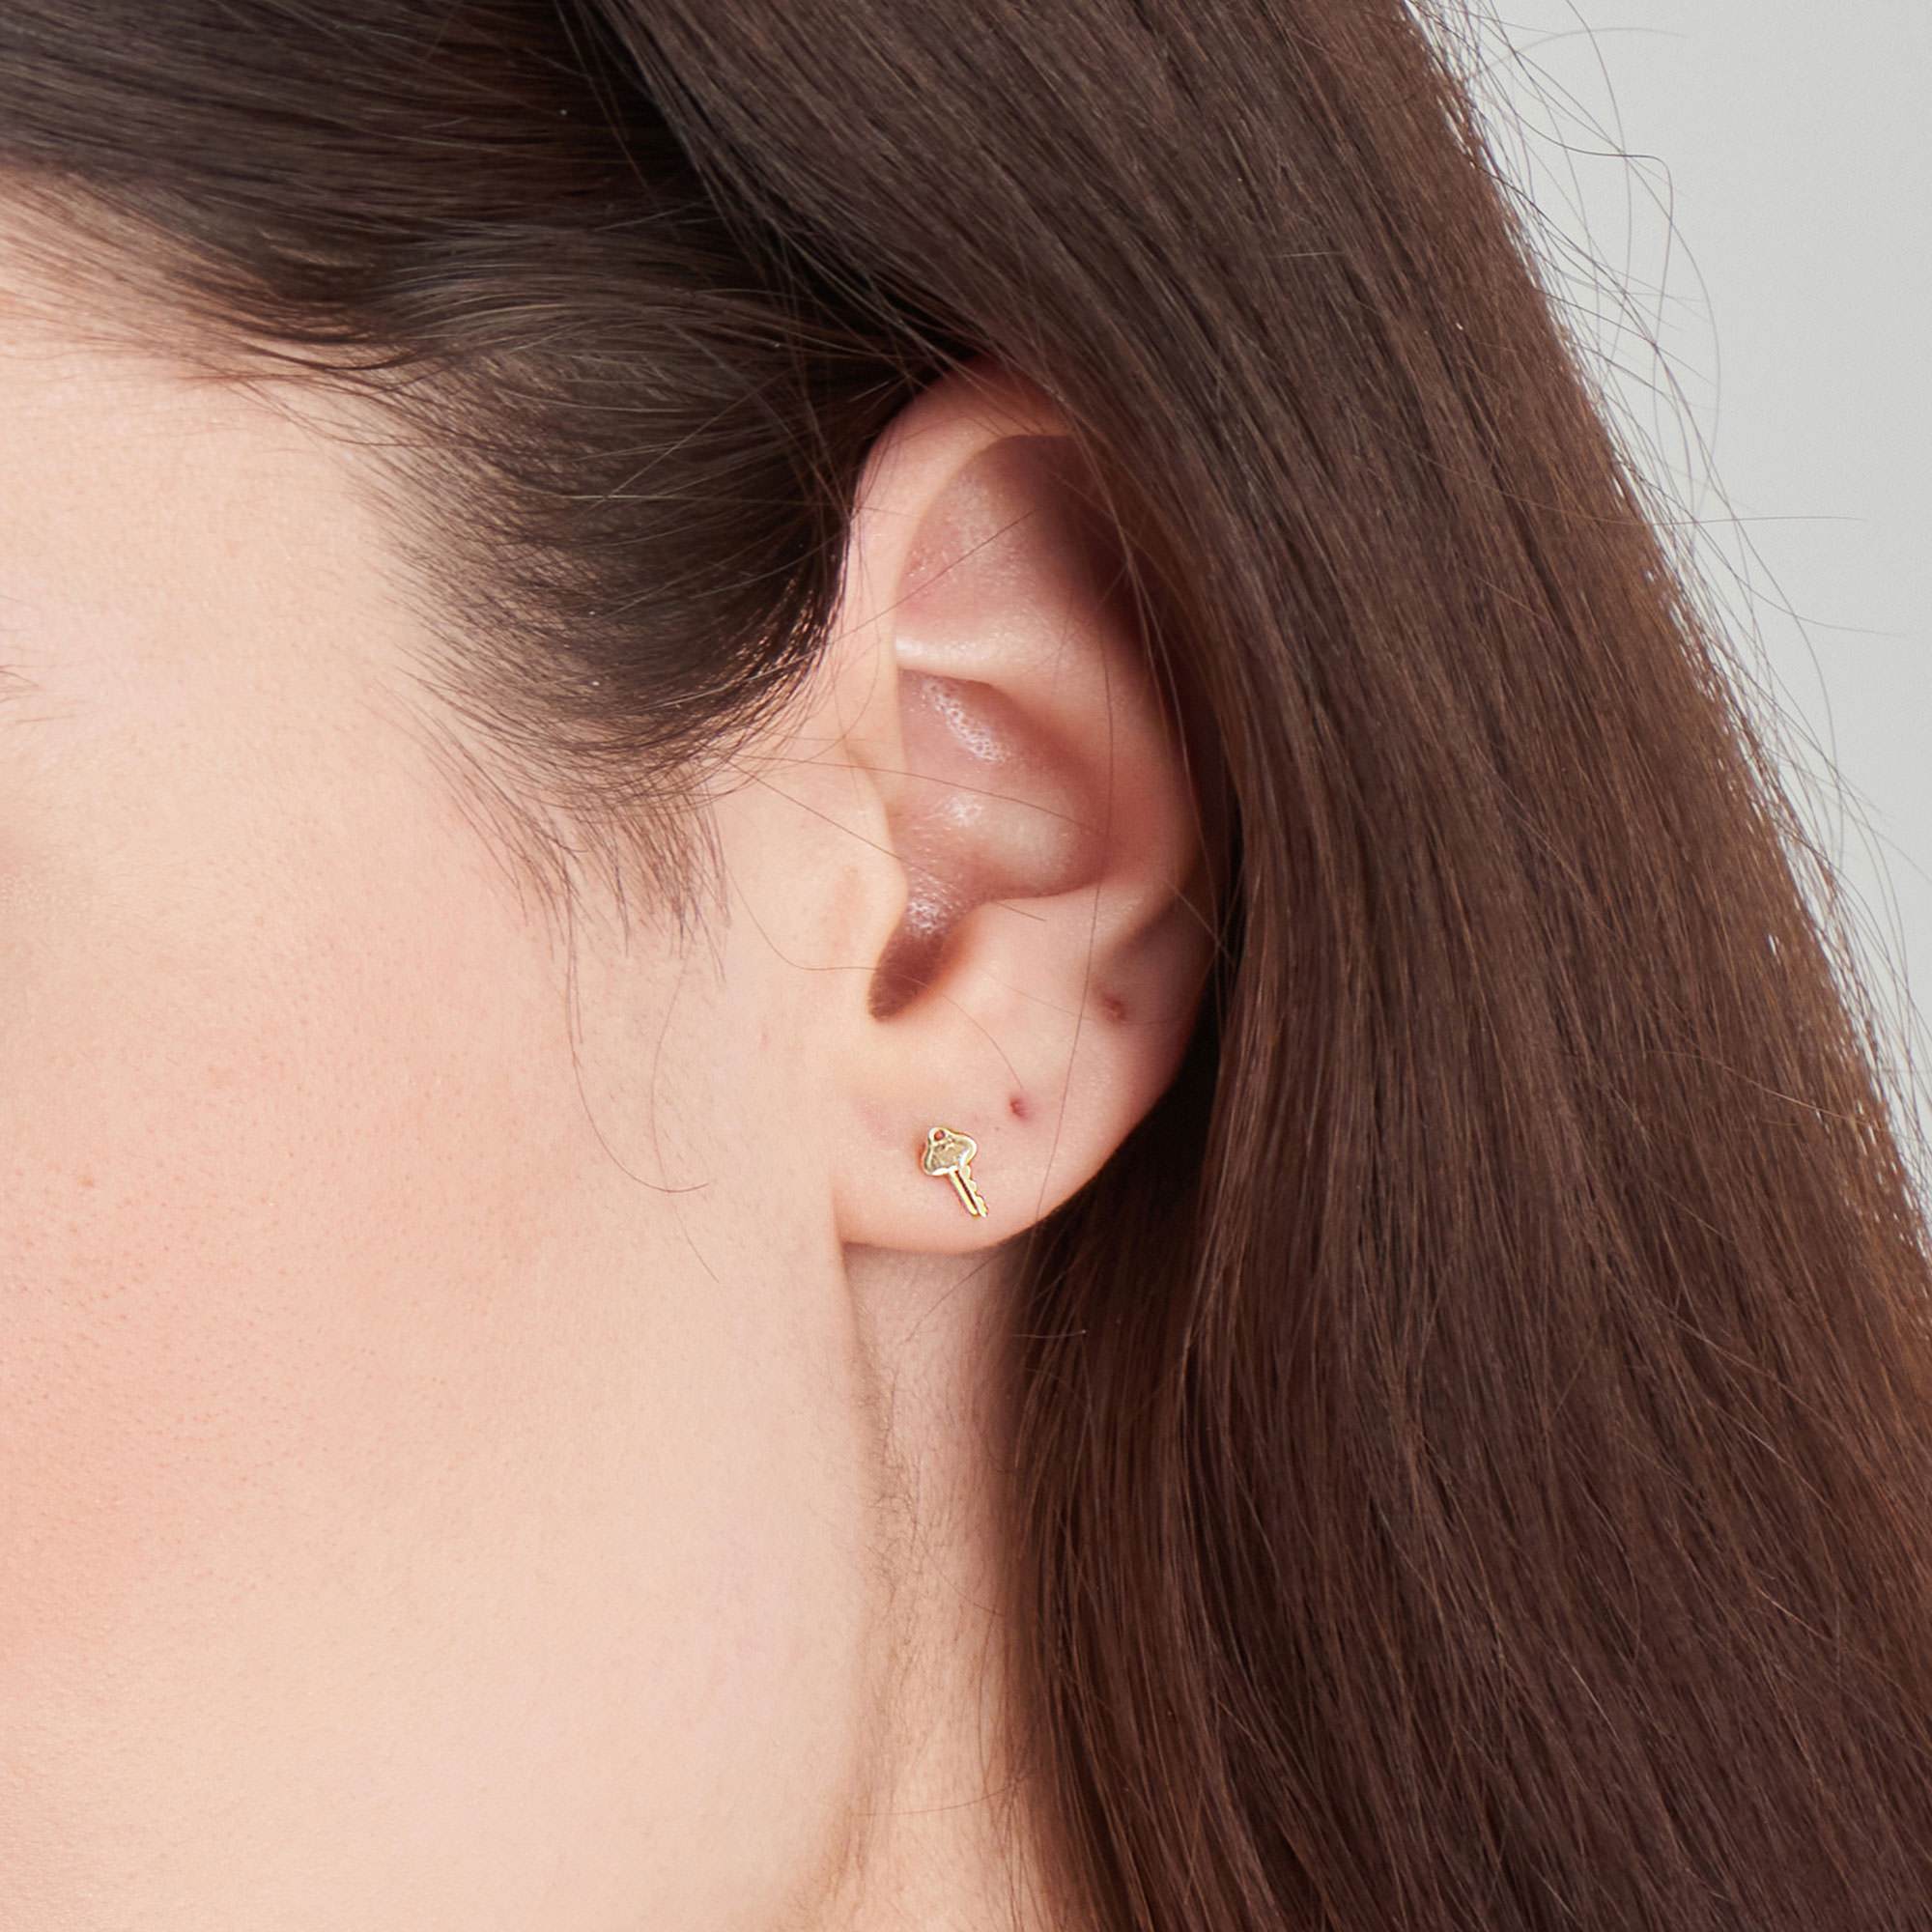 Ania Haie 14kt Gold Key Stud Earrings